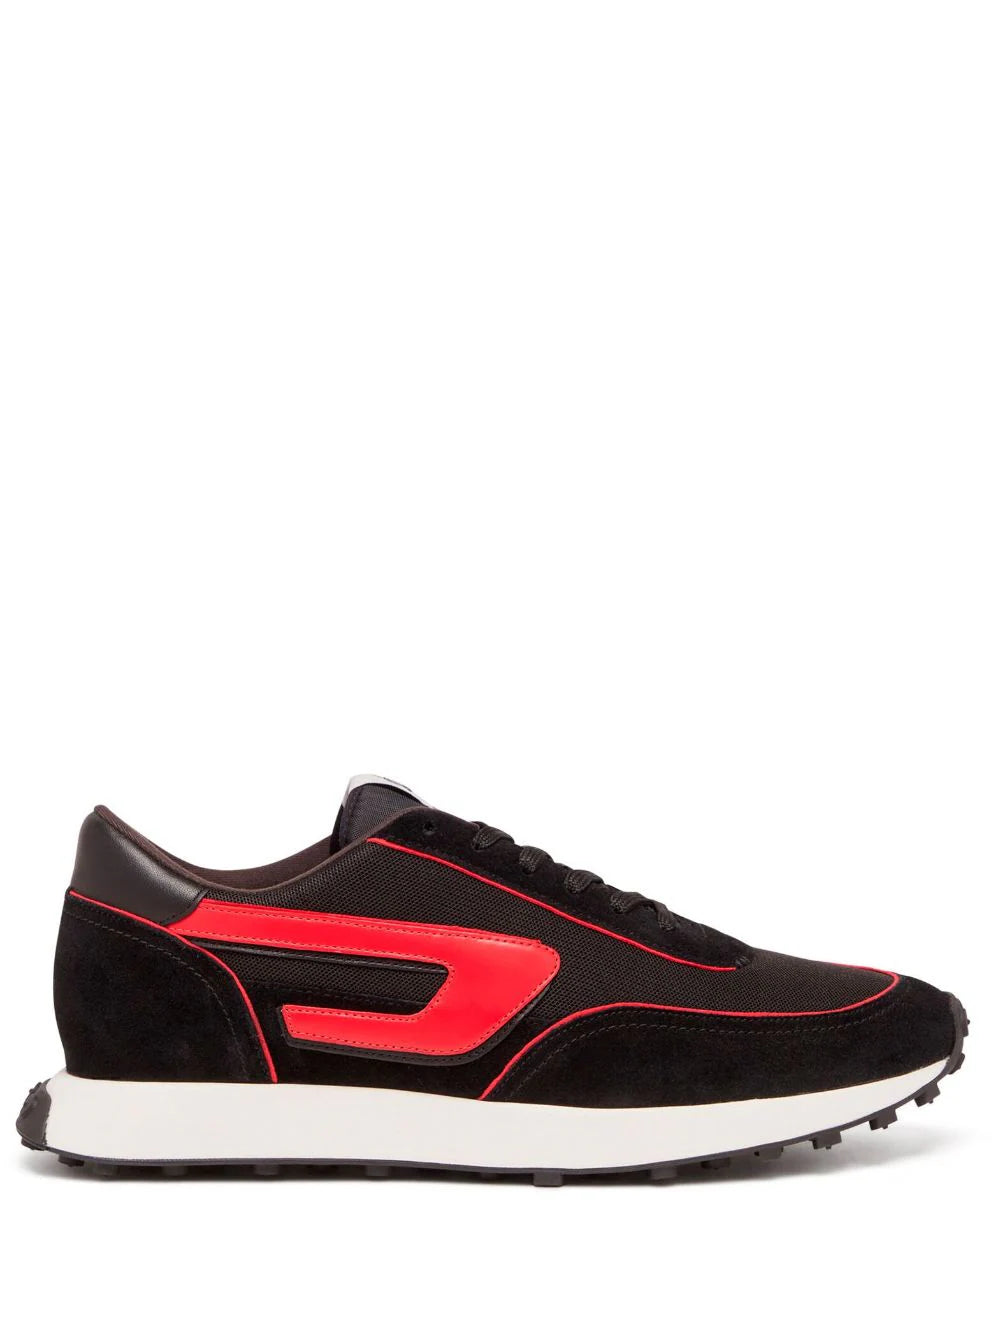 S-Racer High Risk Red/Jet Black Sneakers